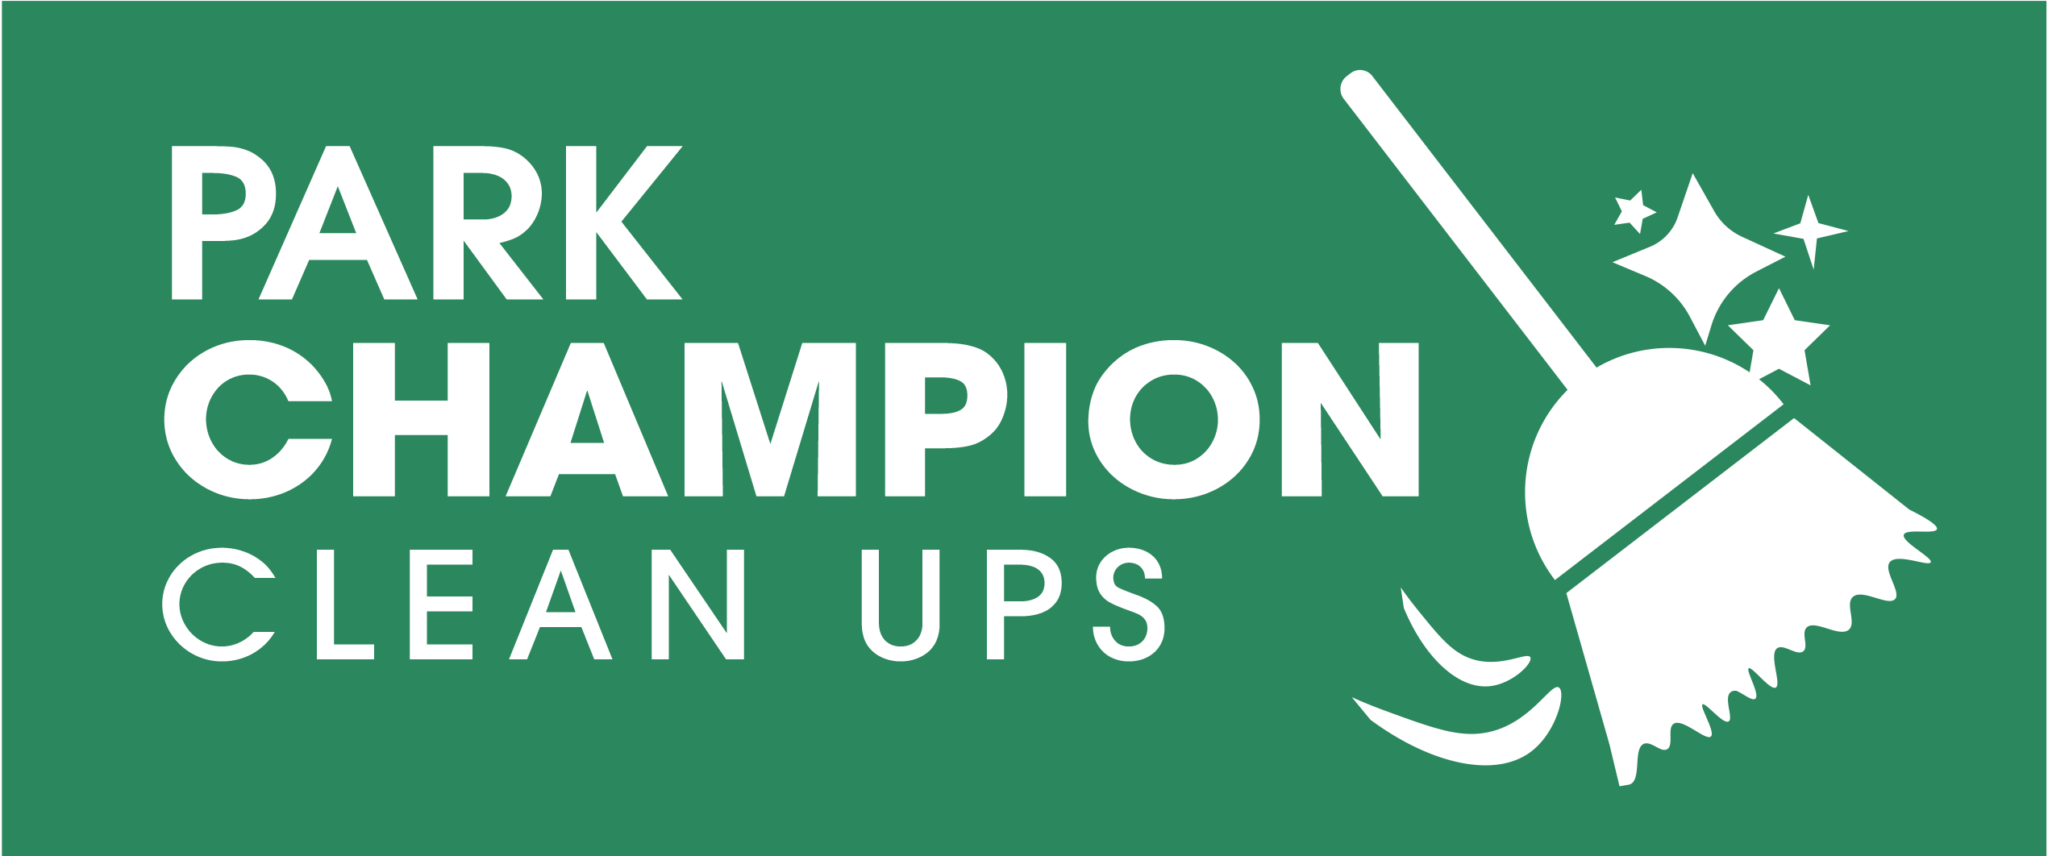 Banner image stating "Park Champion Clean Ups"